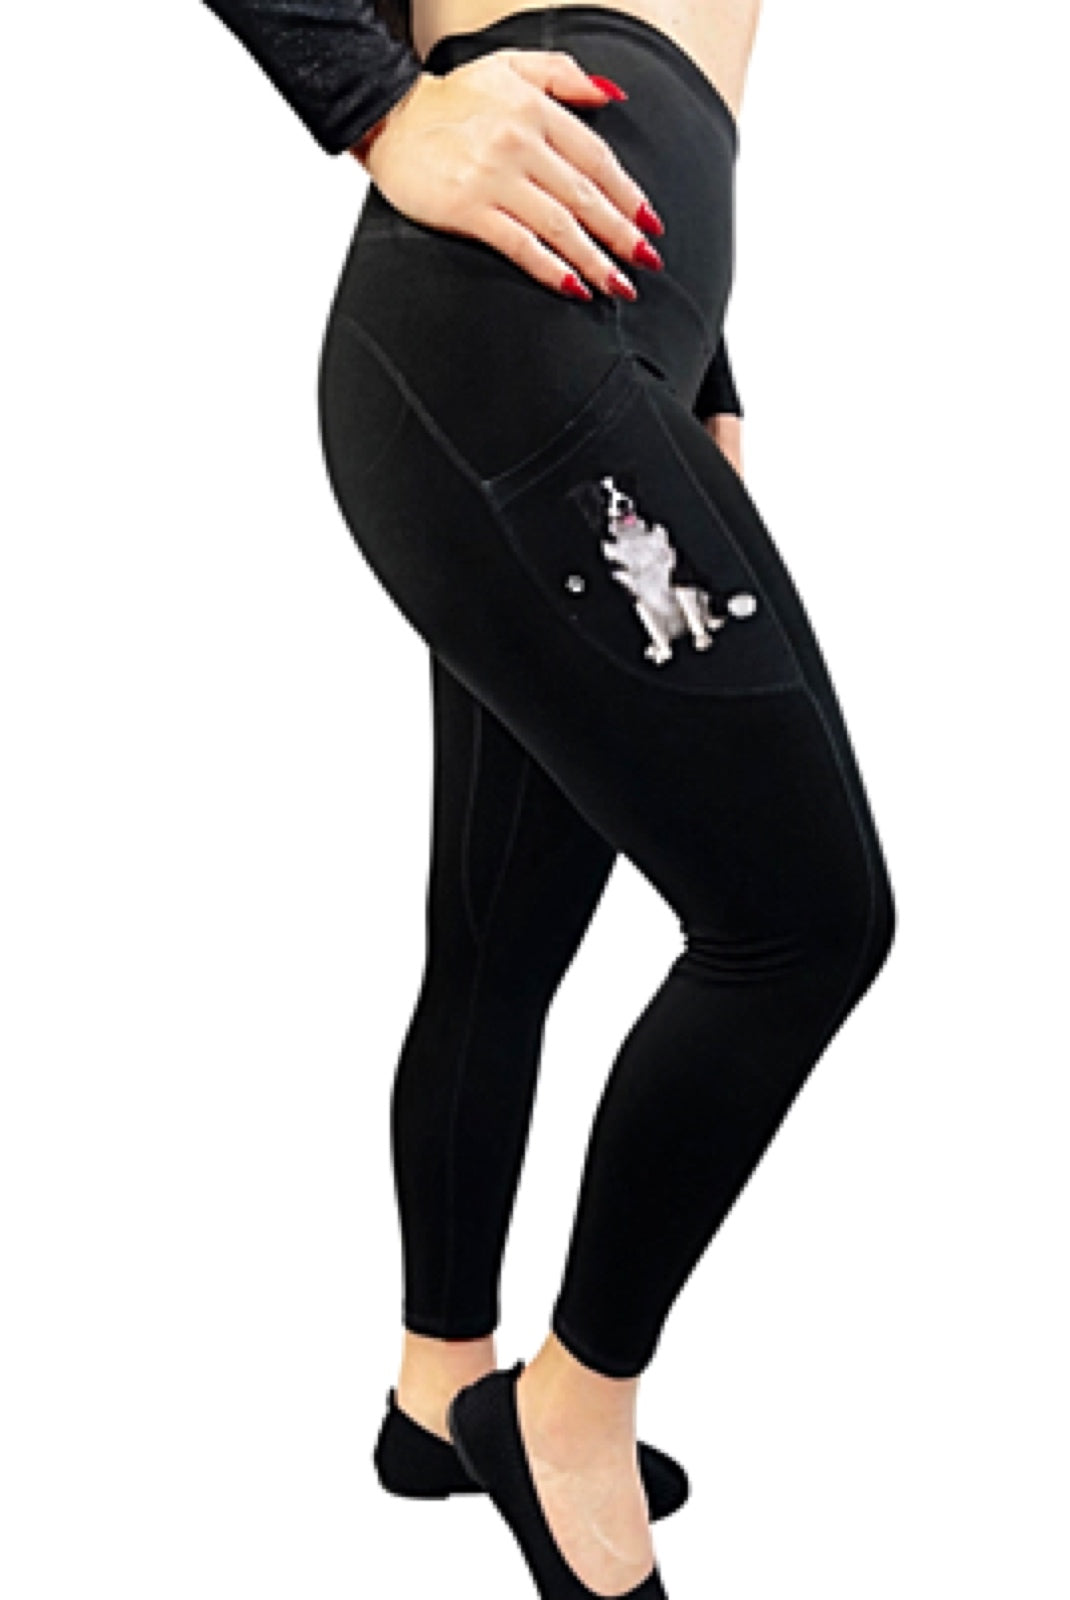 COMFIES LOUNGE PJ SHORTS Ladies BORDER COLLIE Dog By E&S PETS